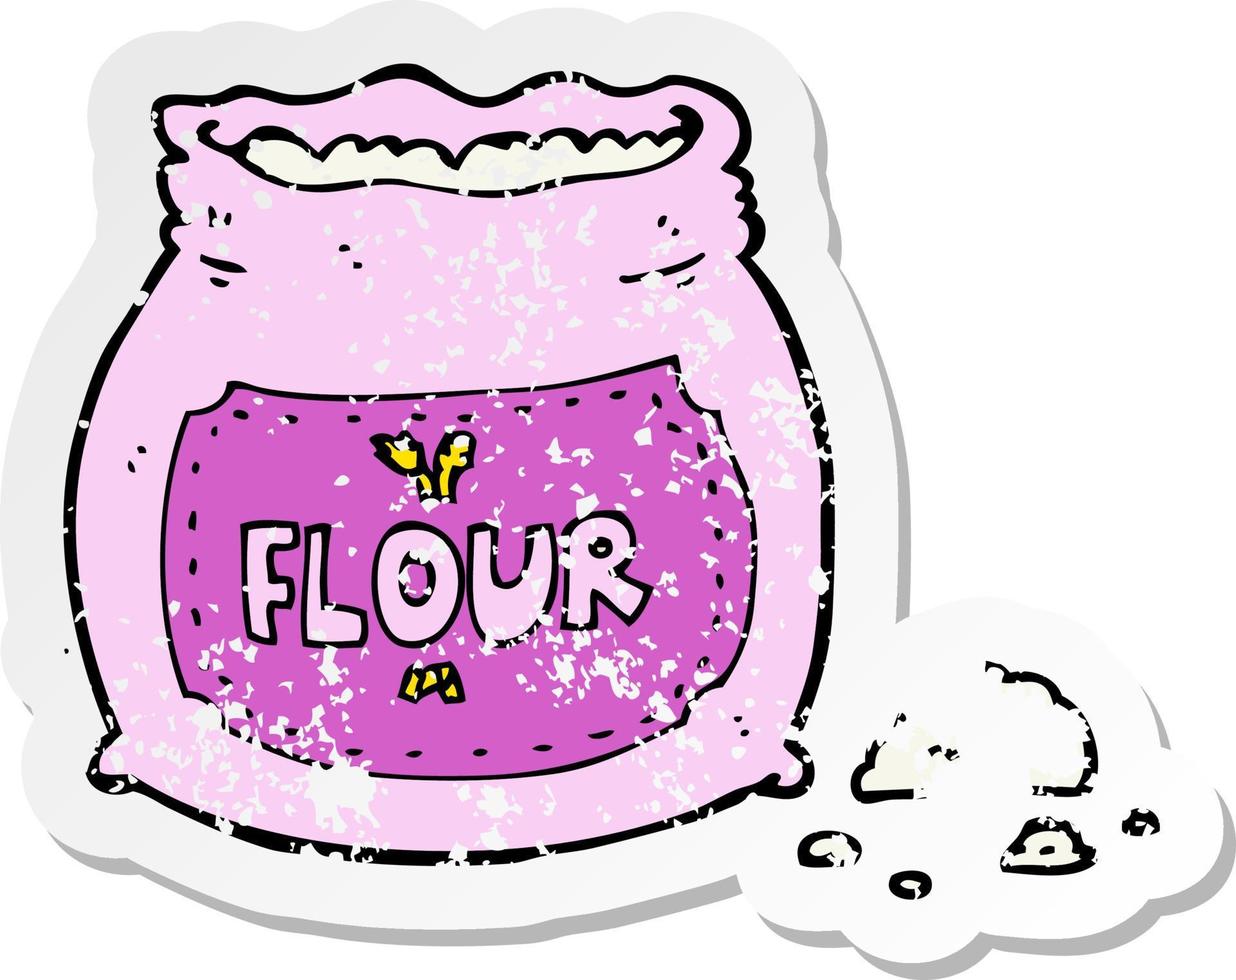 retro distressed sticker of a cartoon pink bag of flour vector